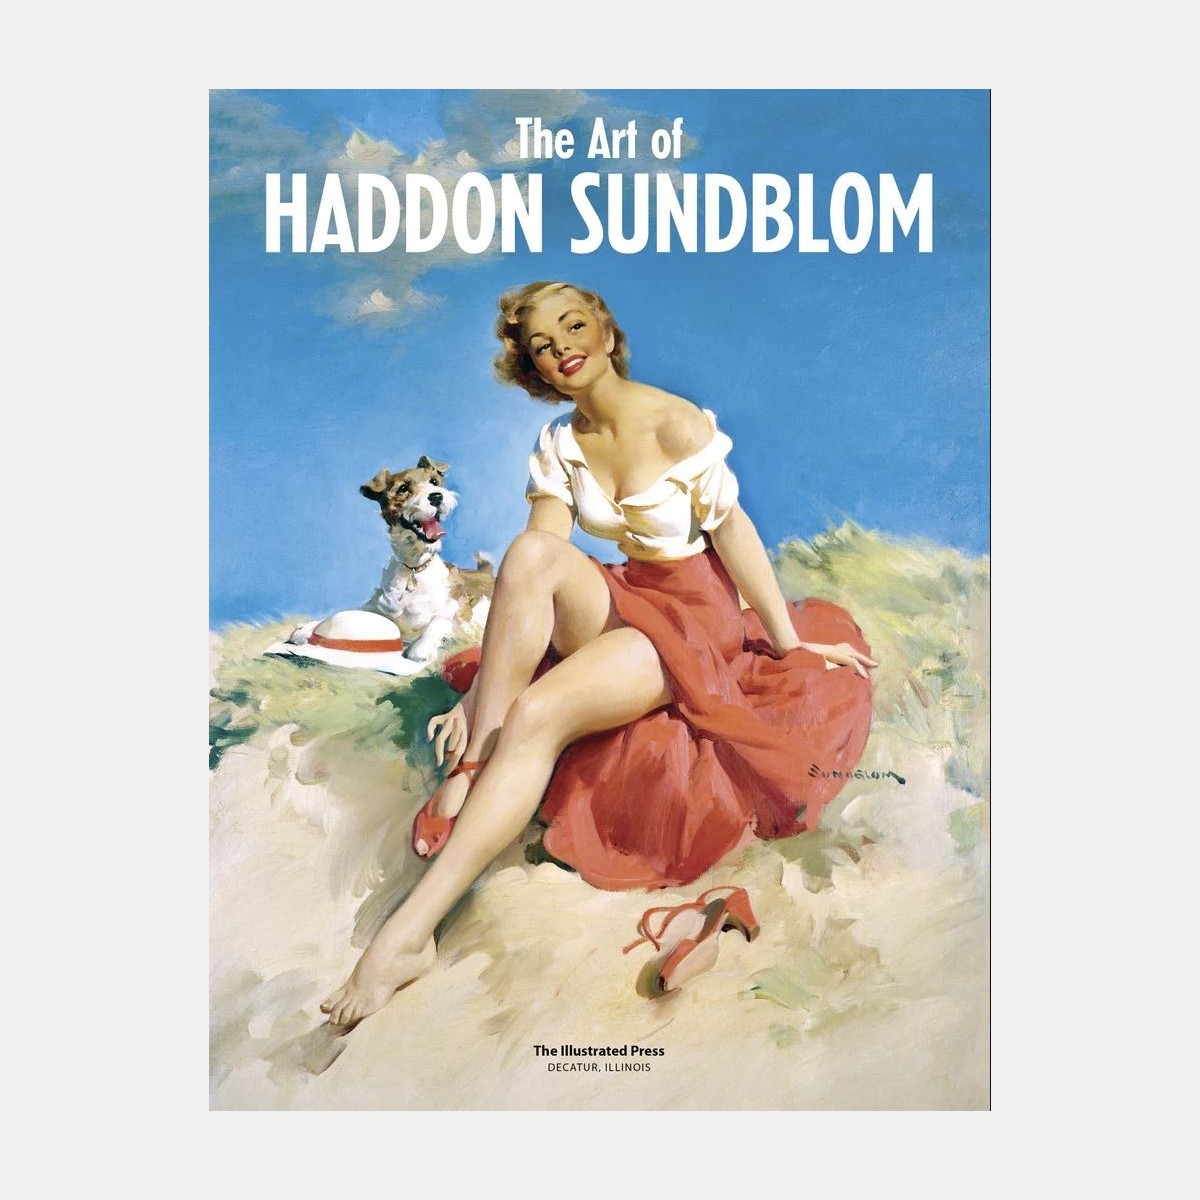 The Art of Haddon Sundblom